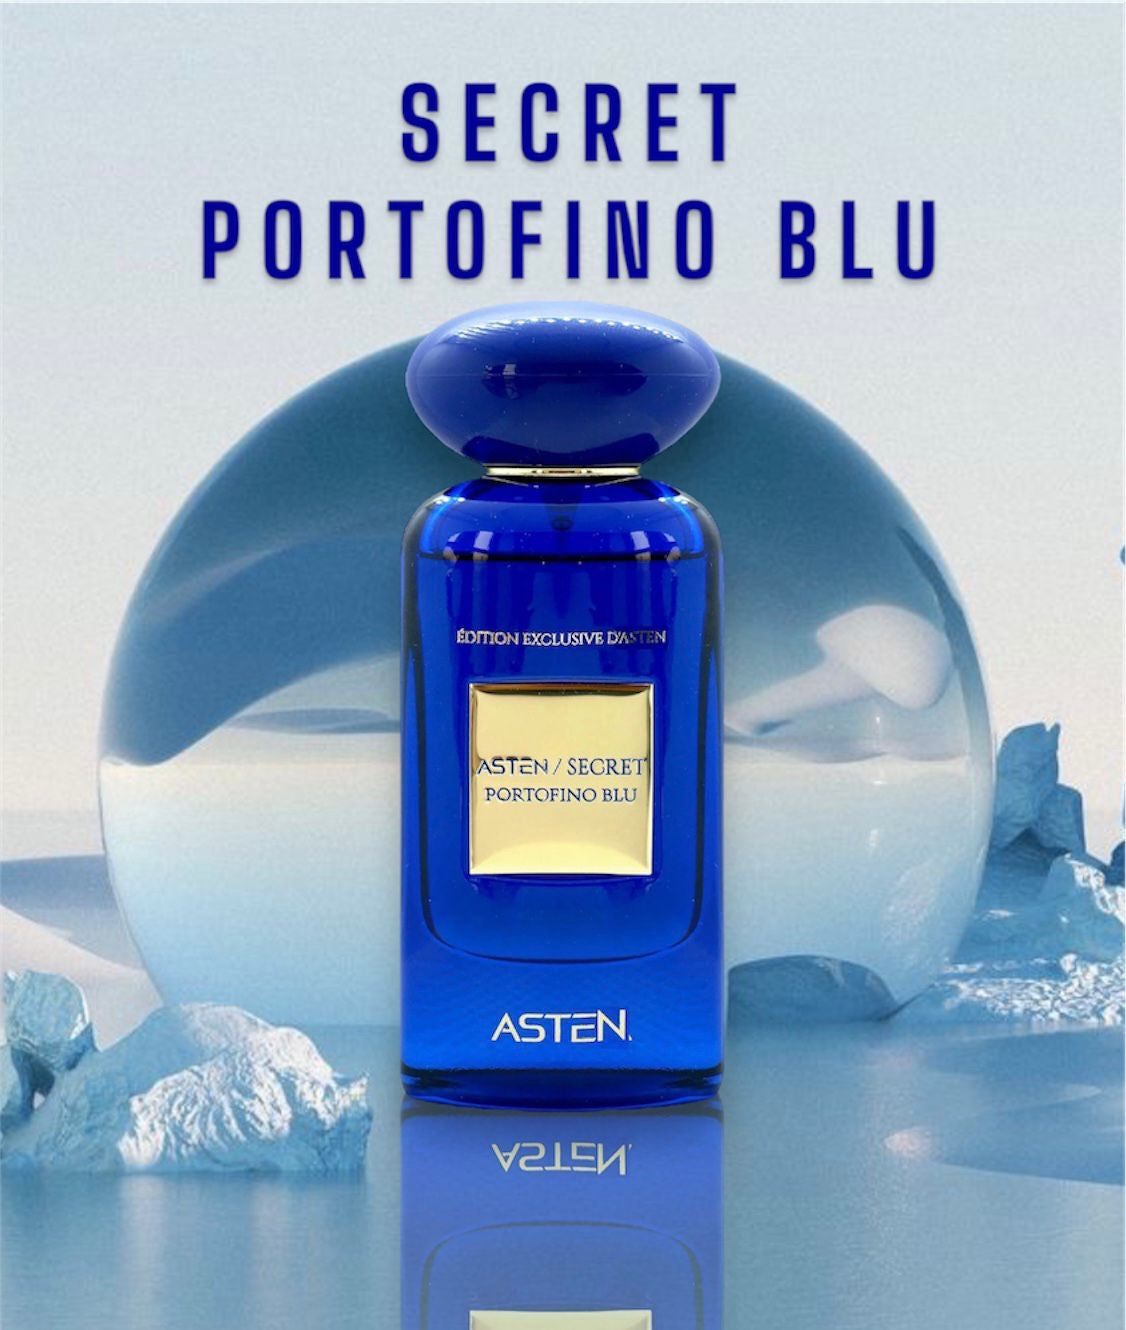 Secret portofino blu